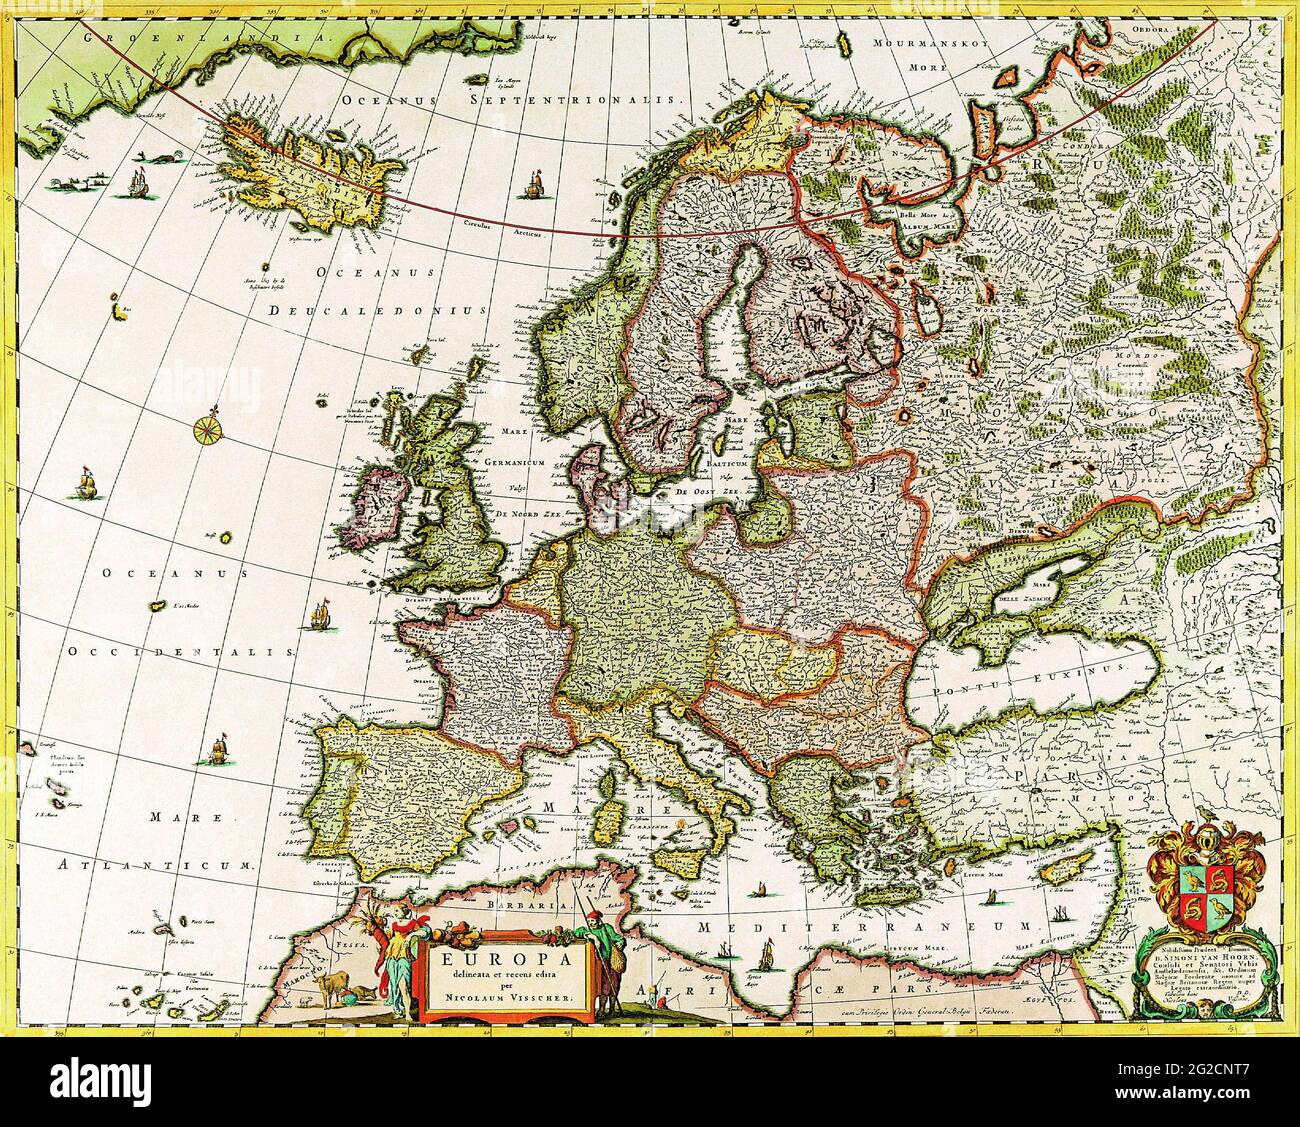 Old Europe Map Retro Europe Map Vintage Europe Map Antique Europe